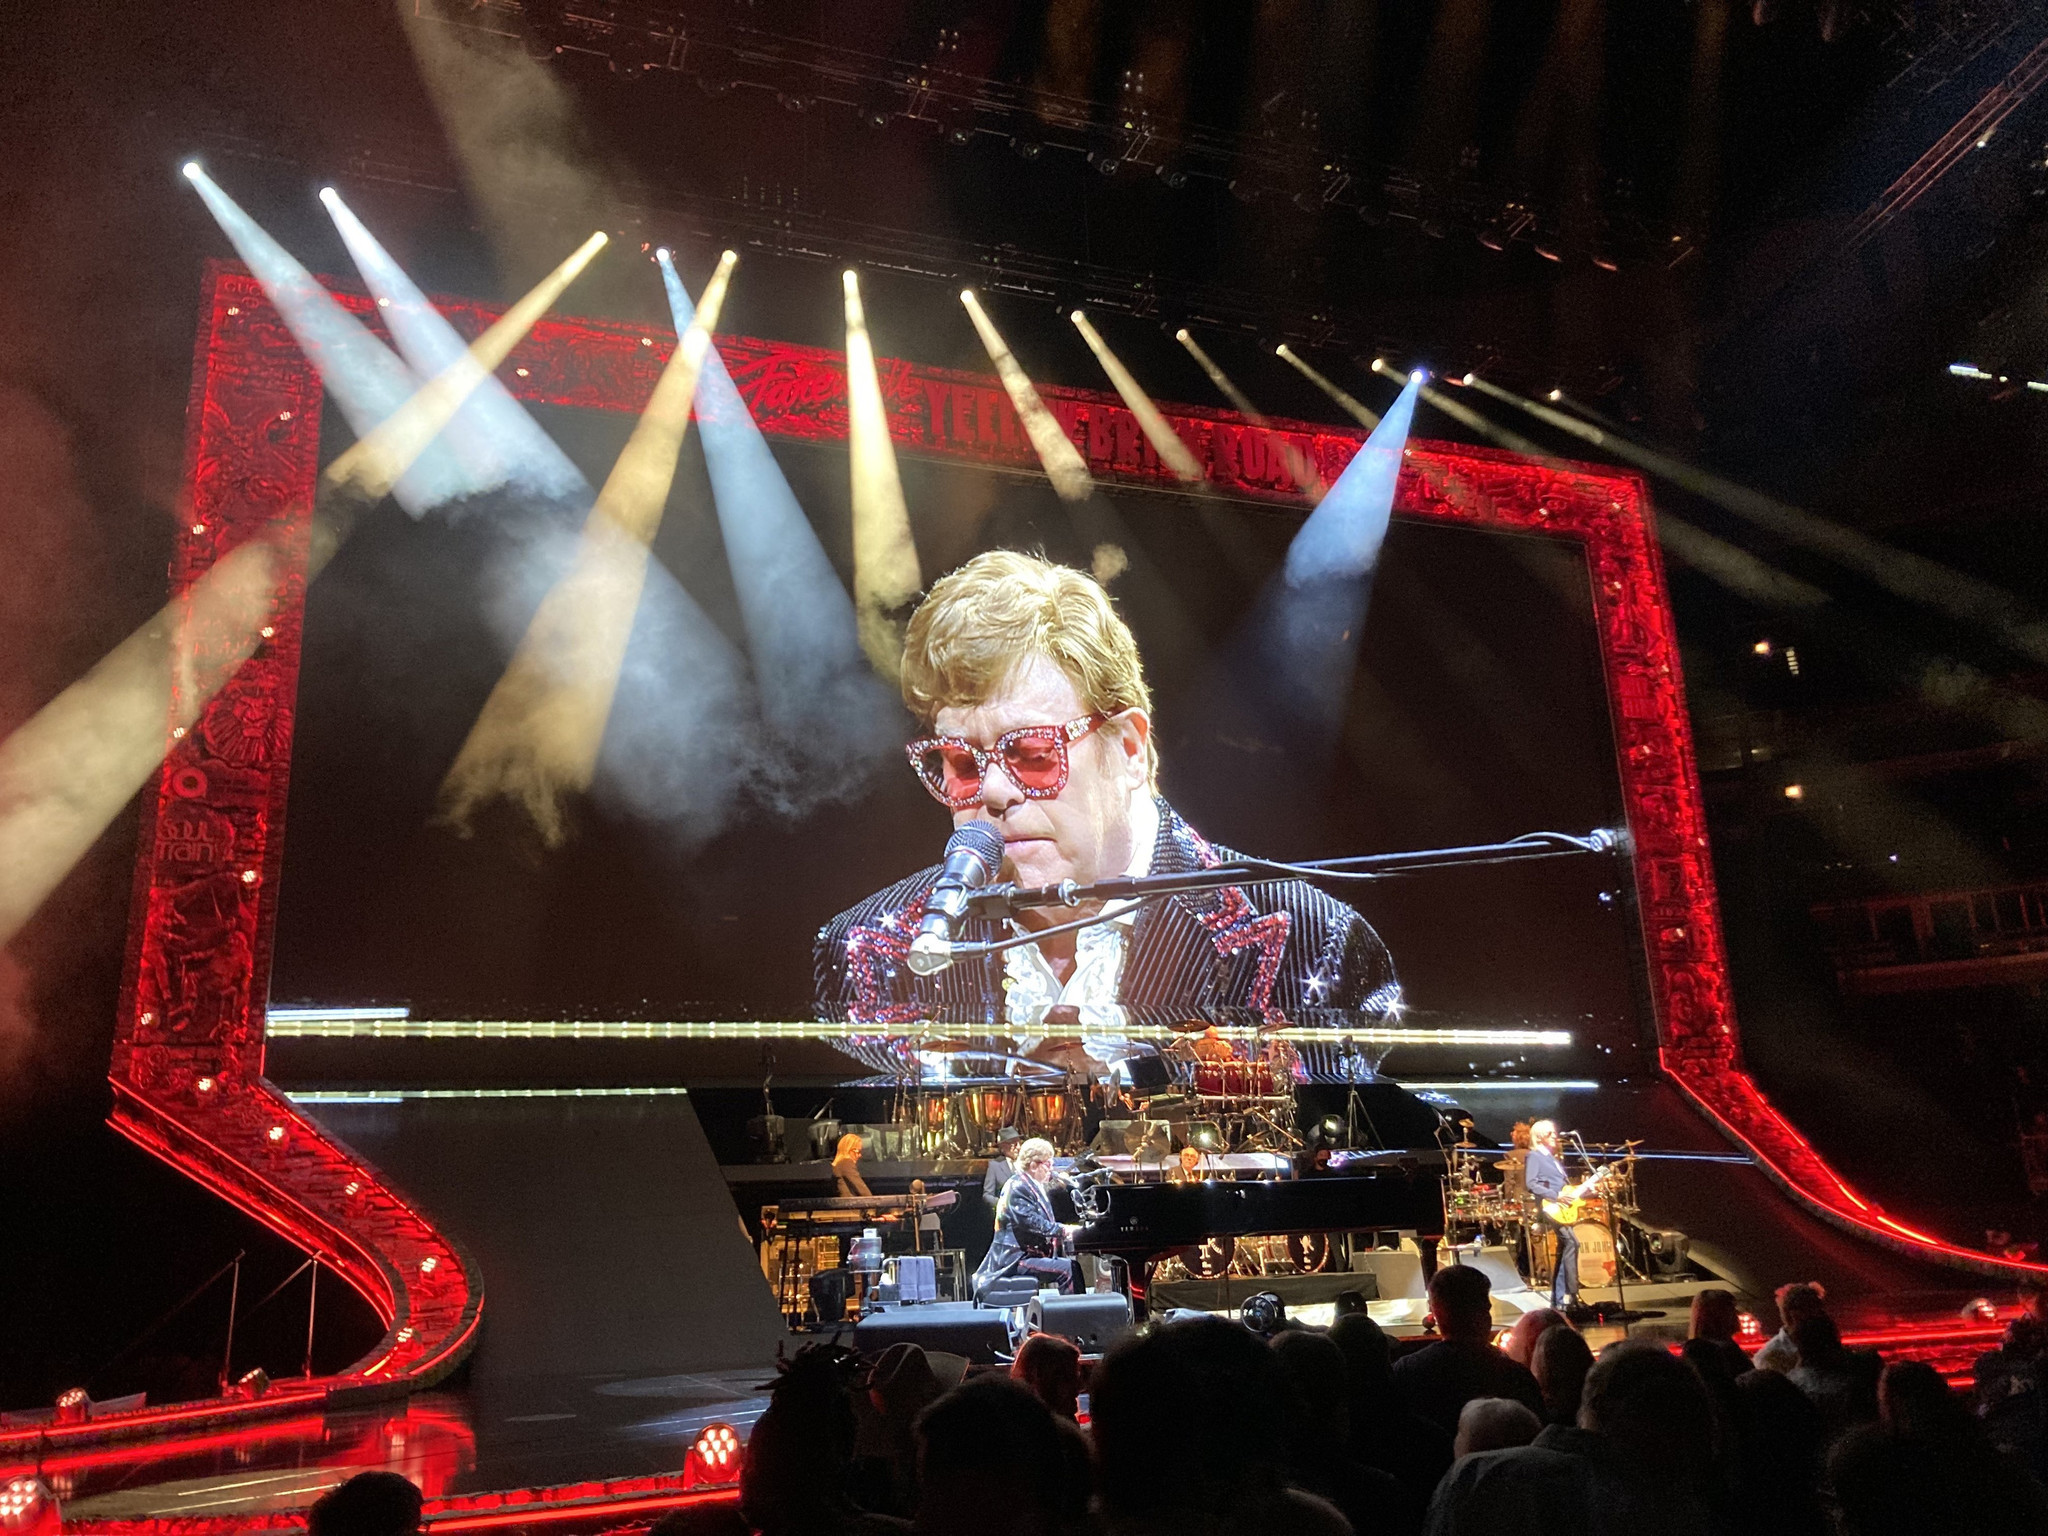 Elton John's Farewell Yellow Brick Road tour at United Center